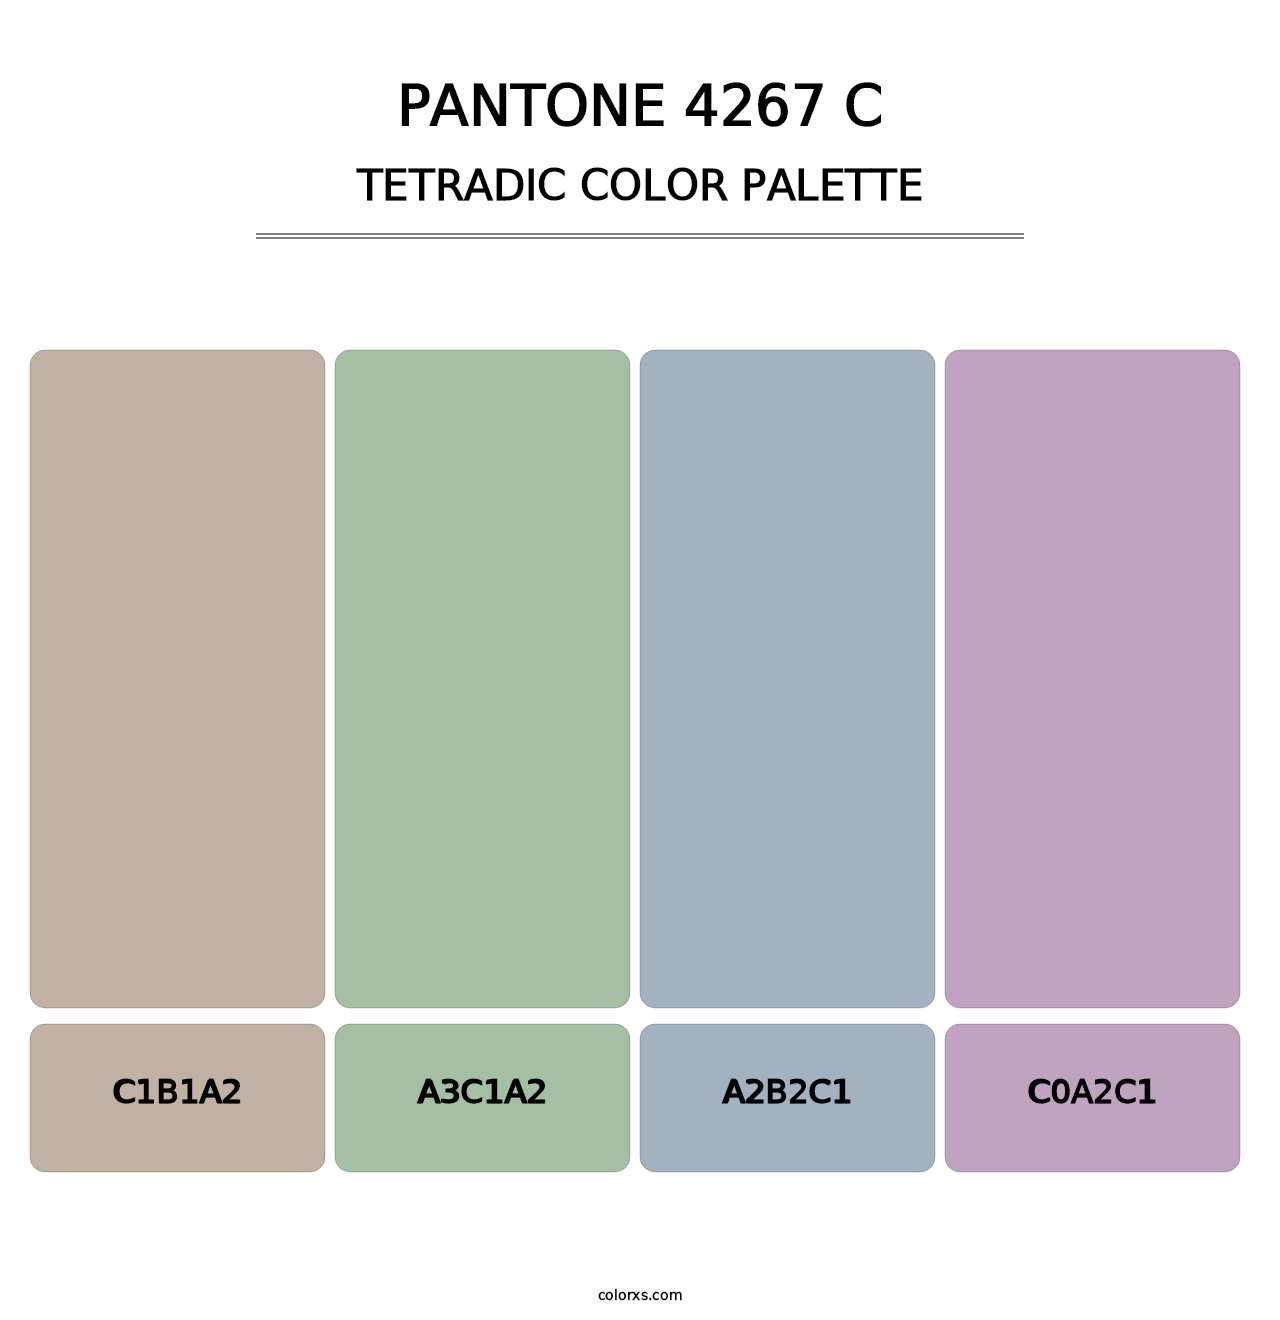 PANTONE 4267 C - Tetradic Color Palette